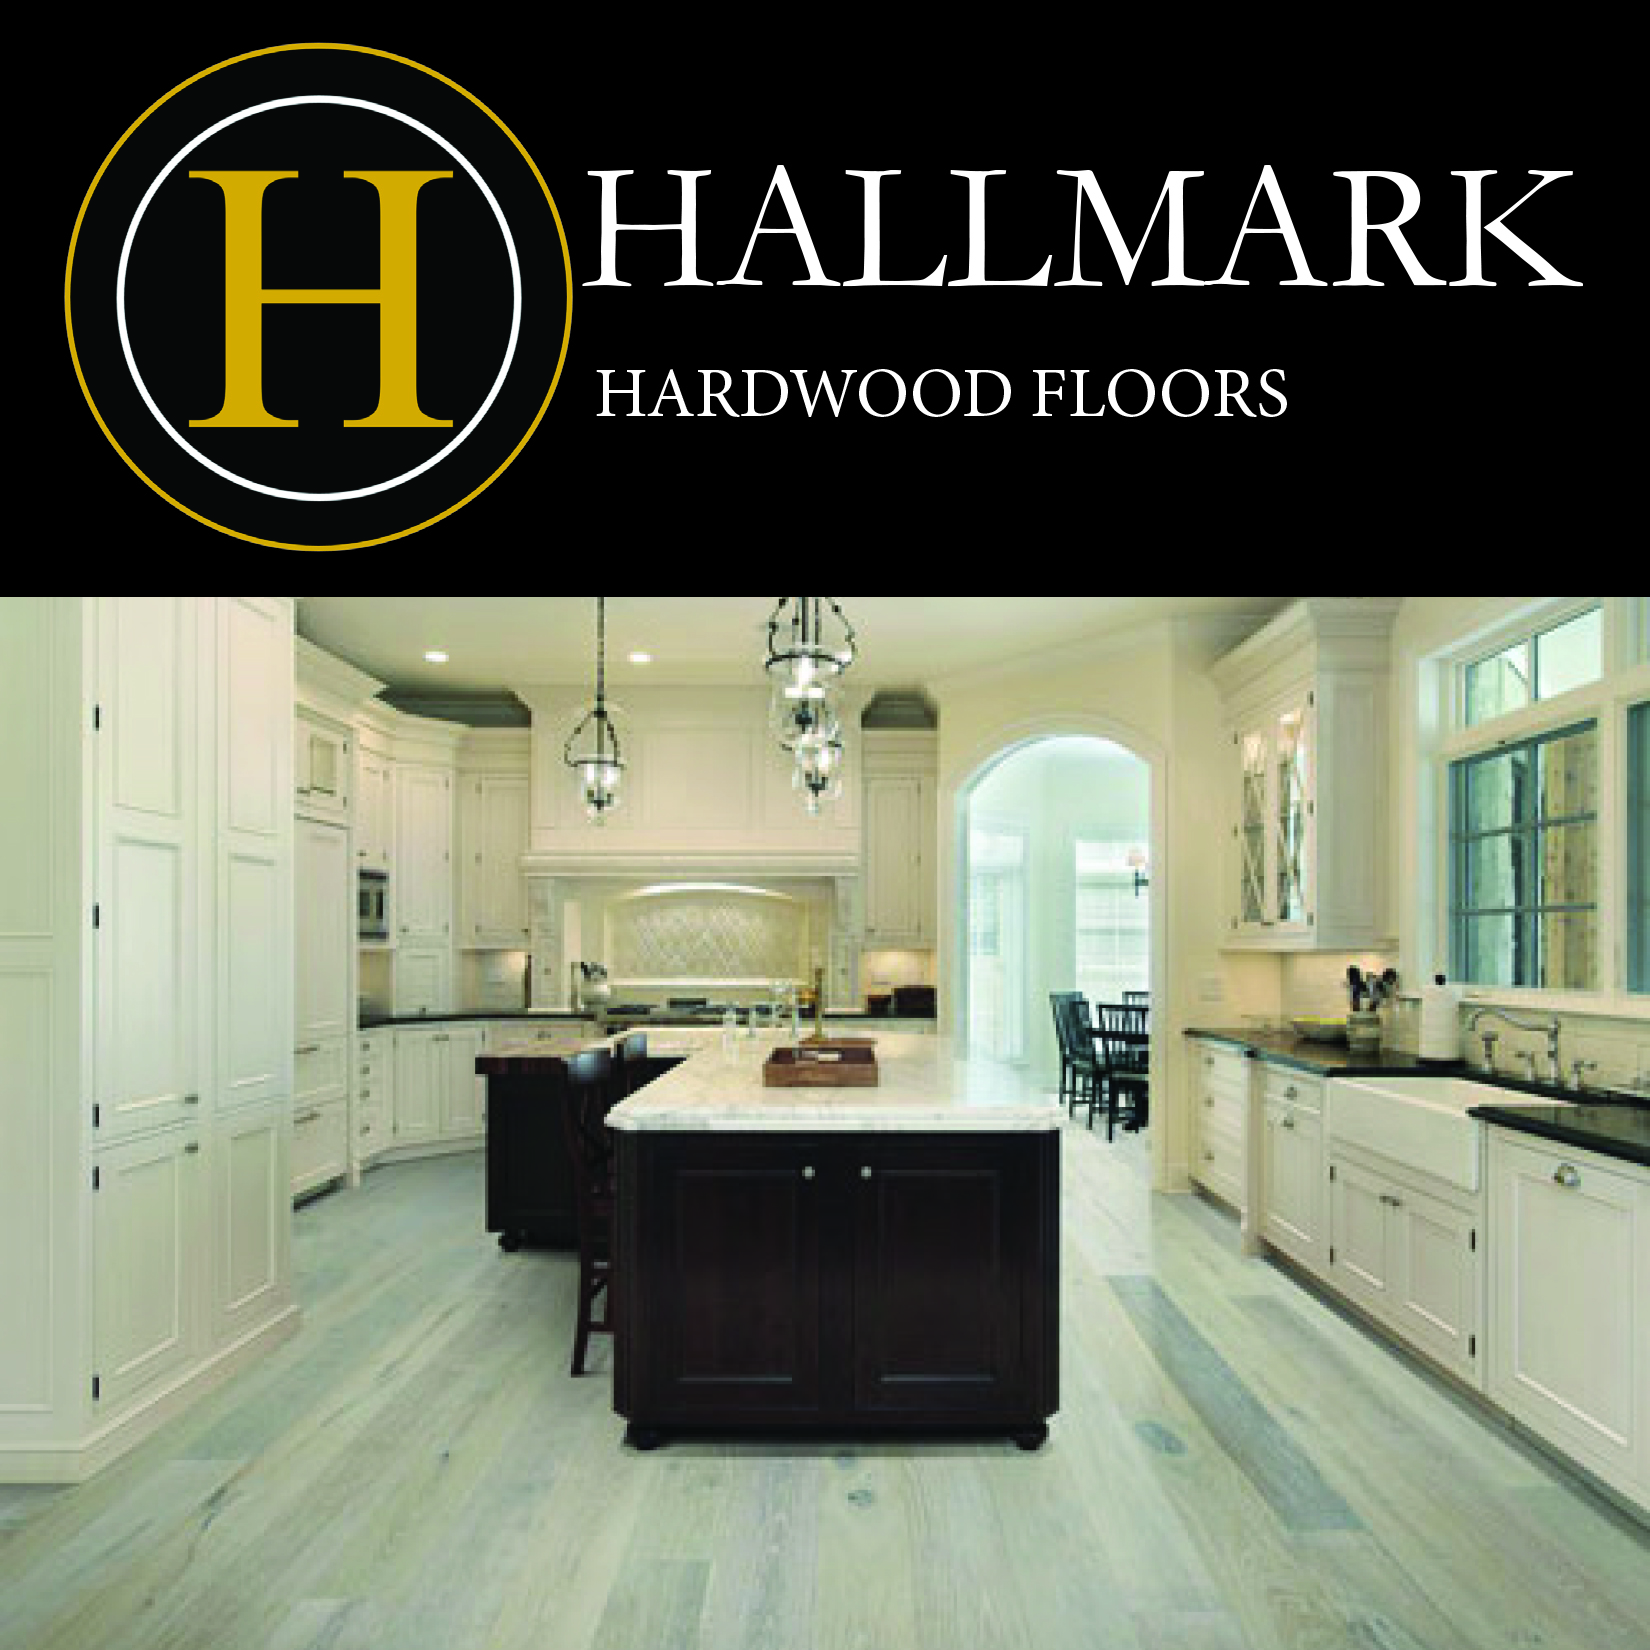 Flooring Options - Denver Hardwood Co.